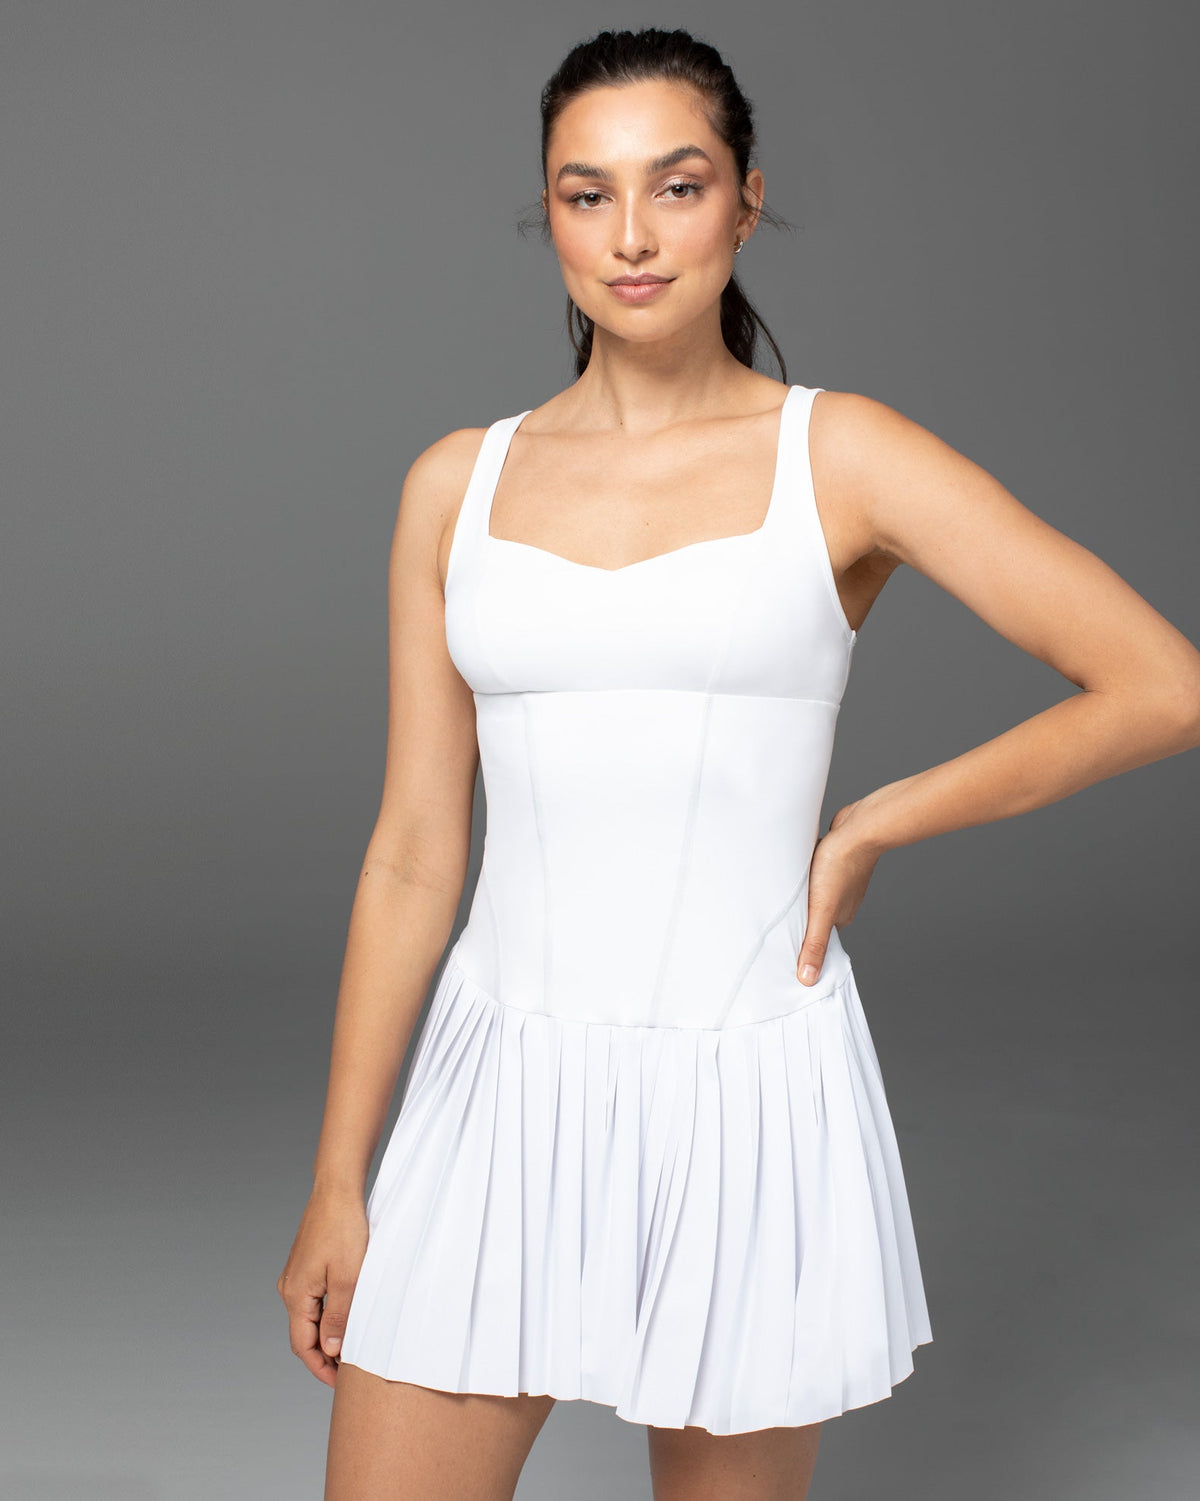 Shop the MICHI Instinct Tennis Dress